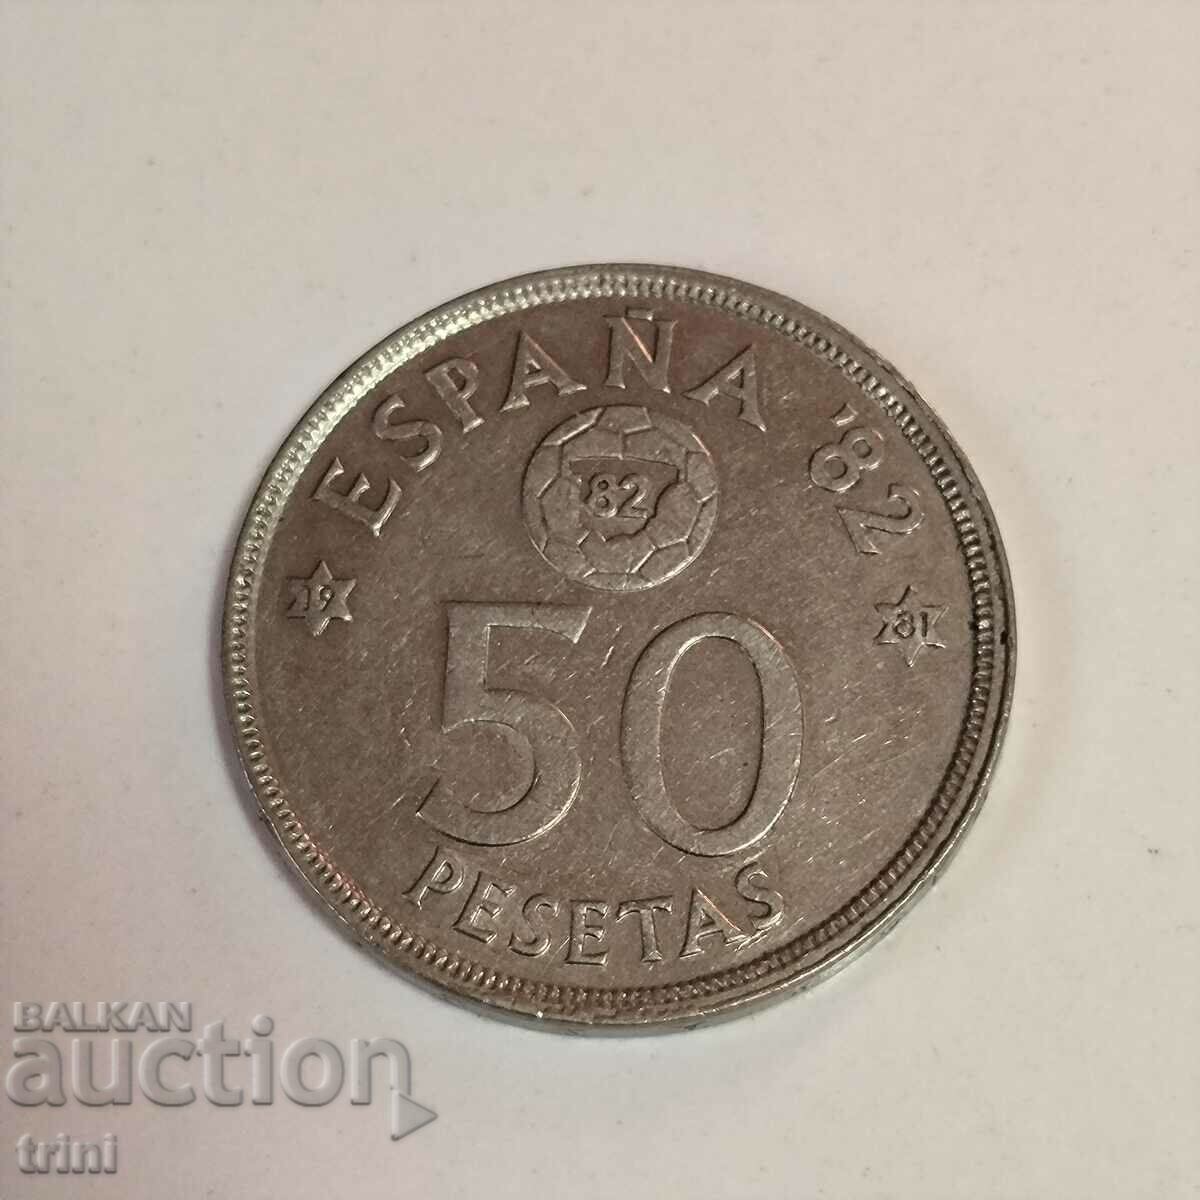 Spain 50 pesetas 1980 year g49